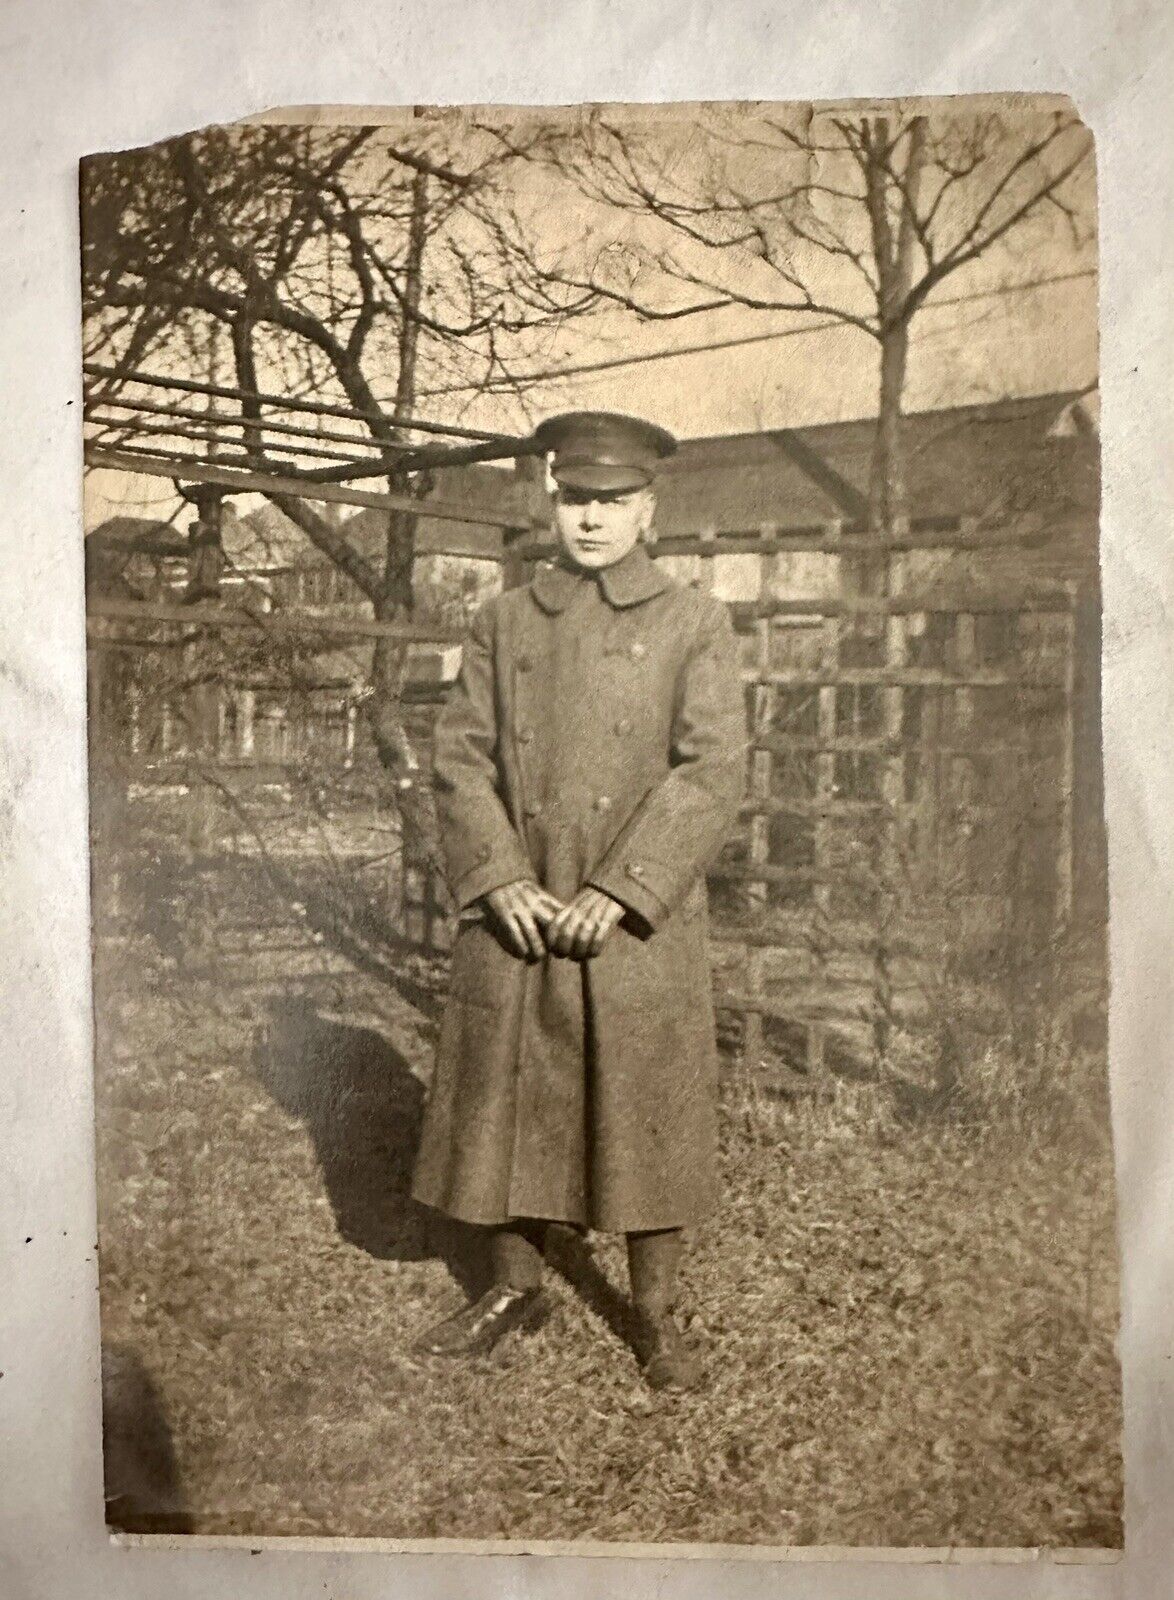 Antique World War 1 Soldier Photograph 1917 Military Uniform Sargent Reder Photo